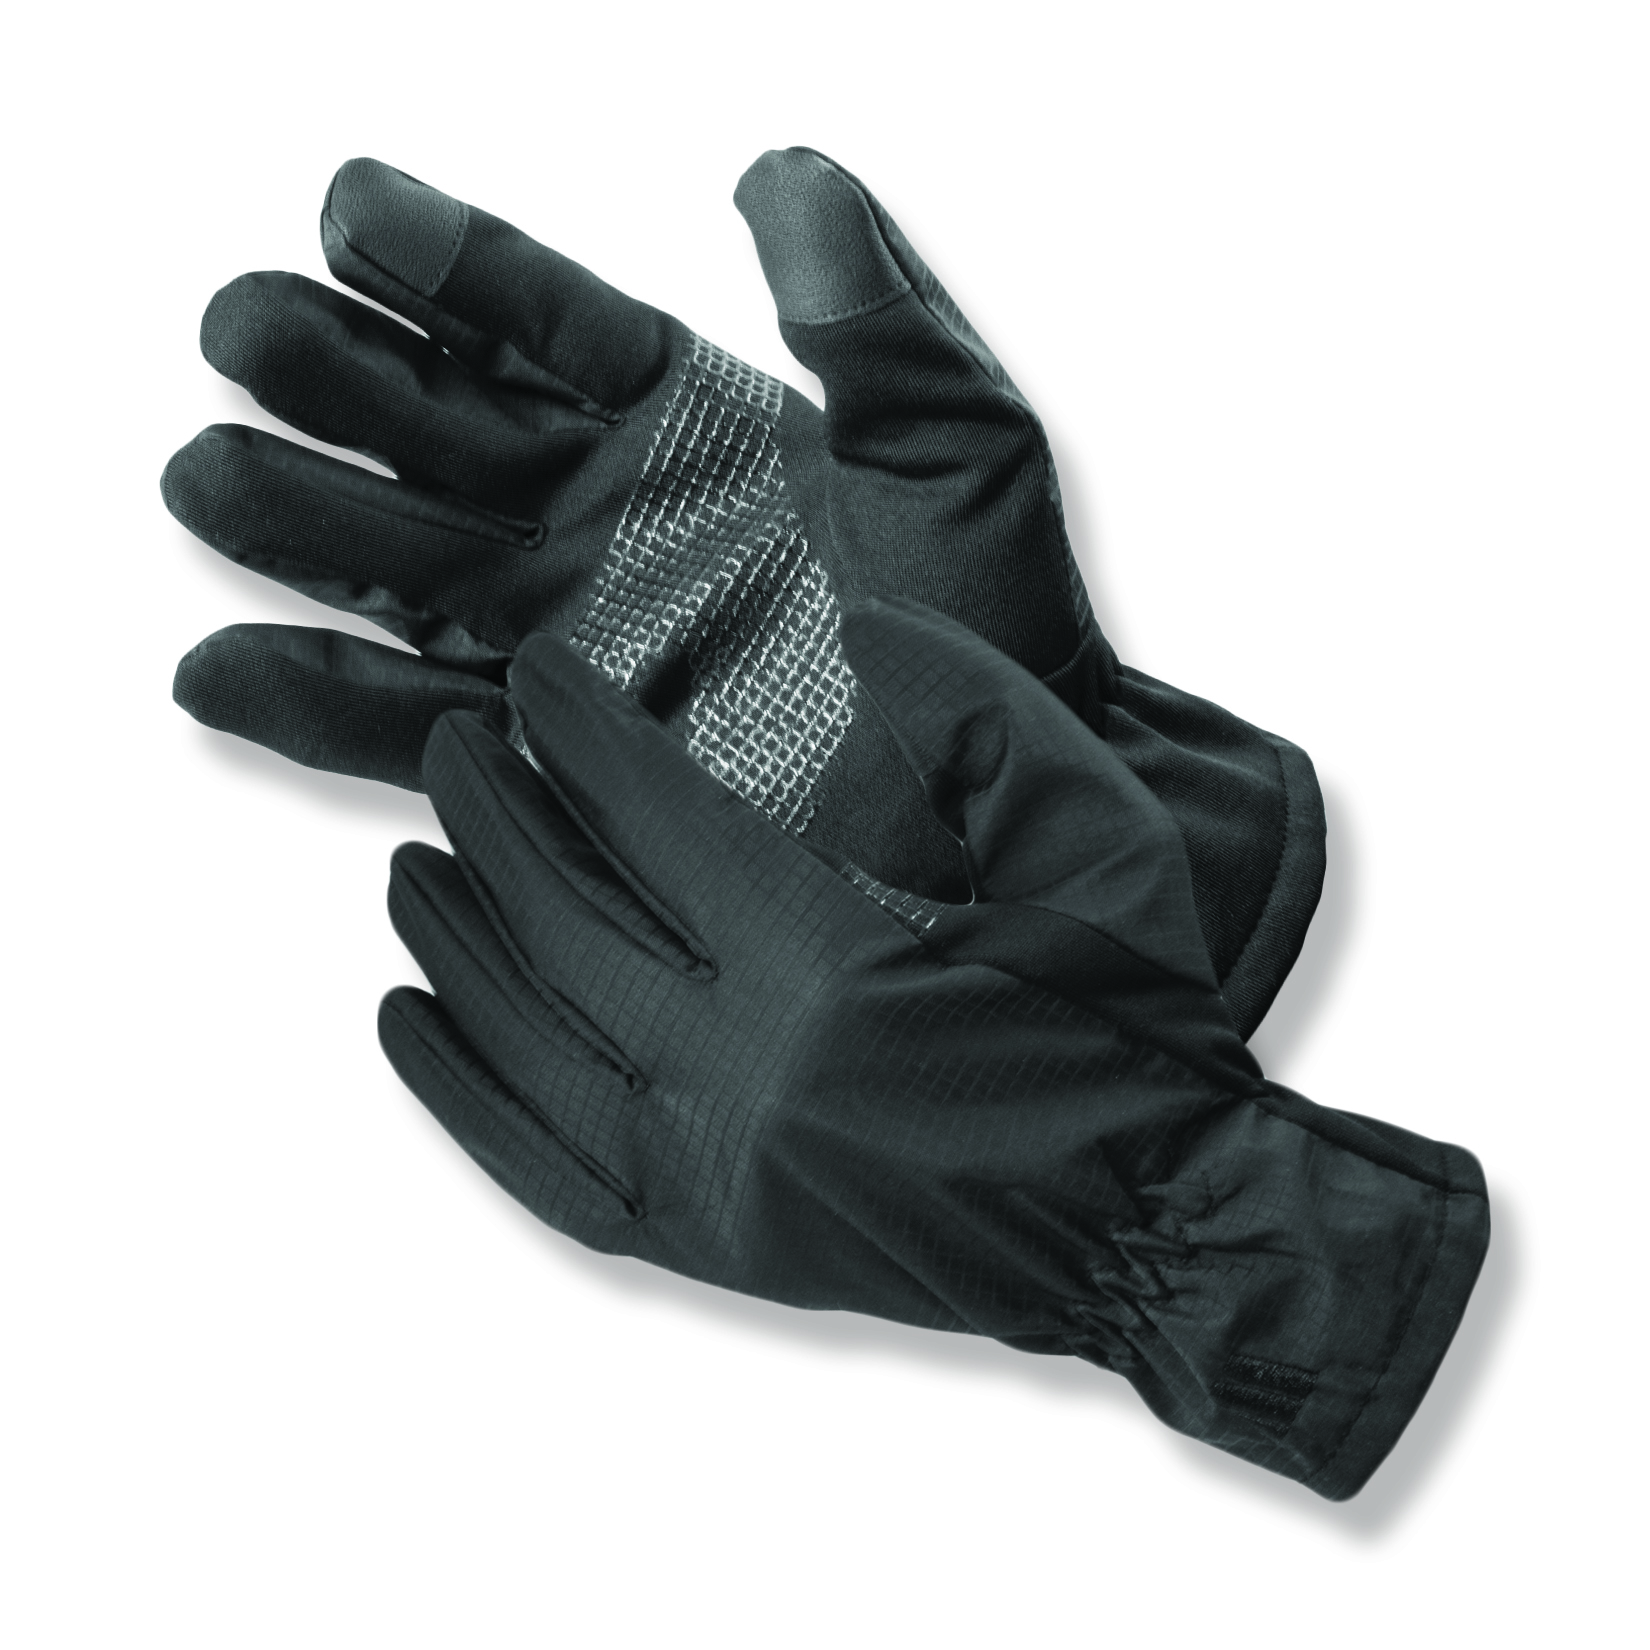 Silk Weight Wind Block Director TS™ Winter Uniform Gloves are touchscreen compatible